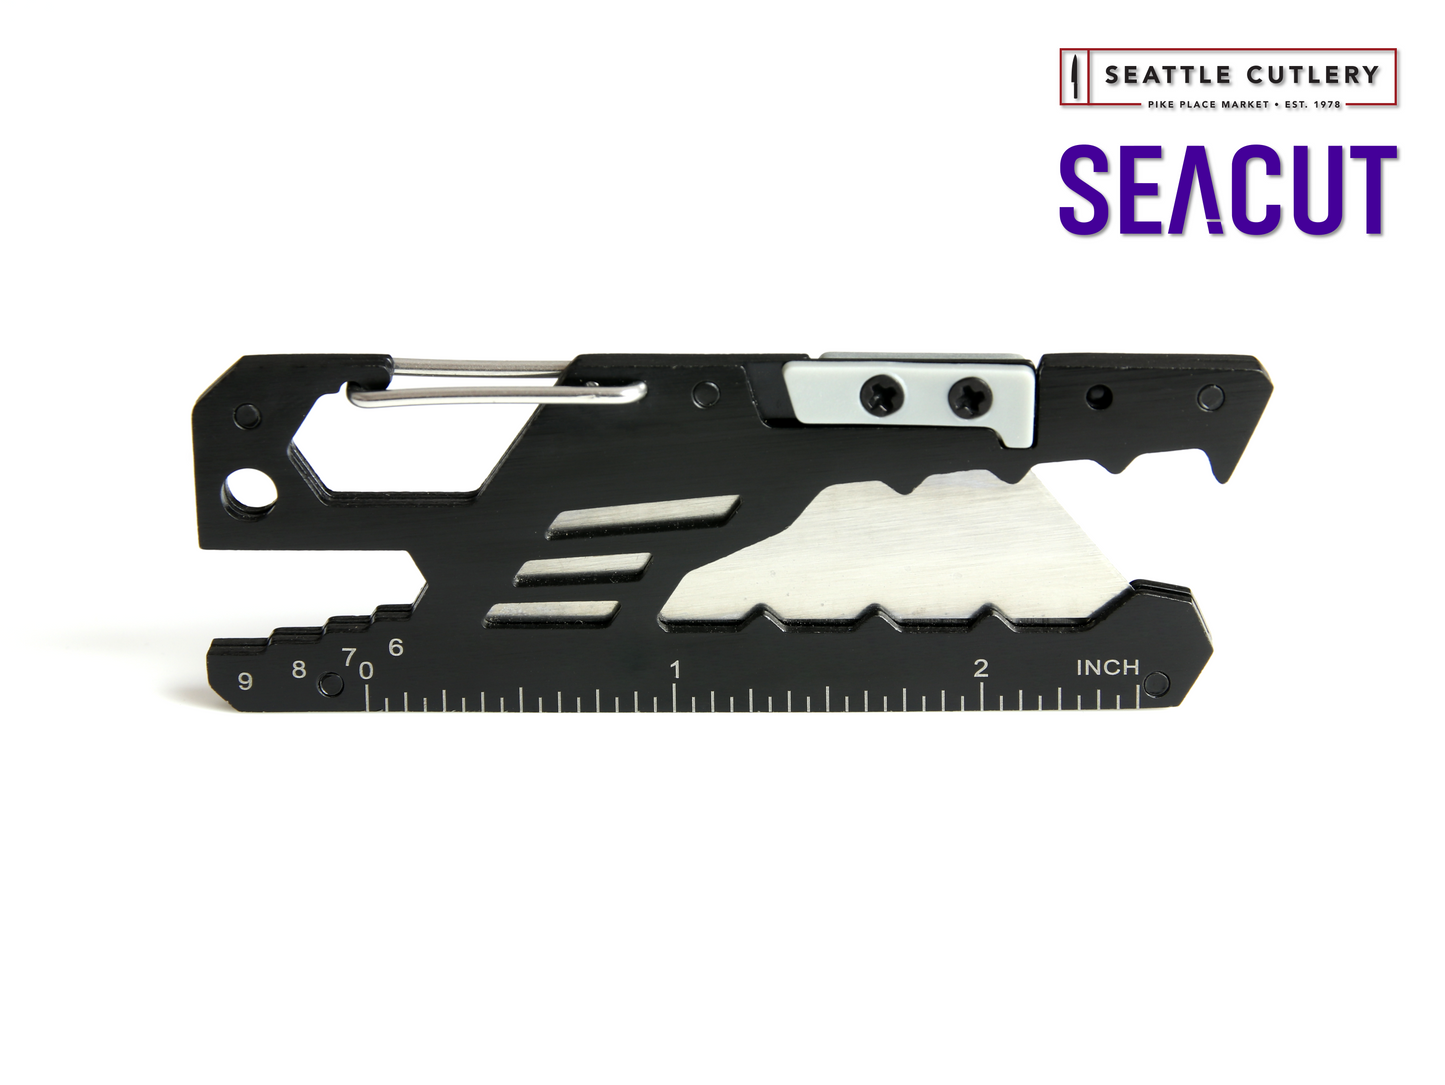 SeaCut Utility Knife & More